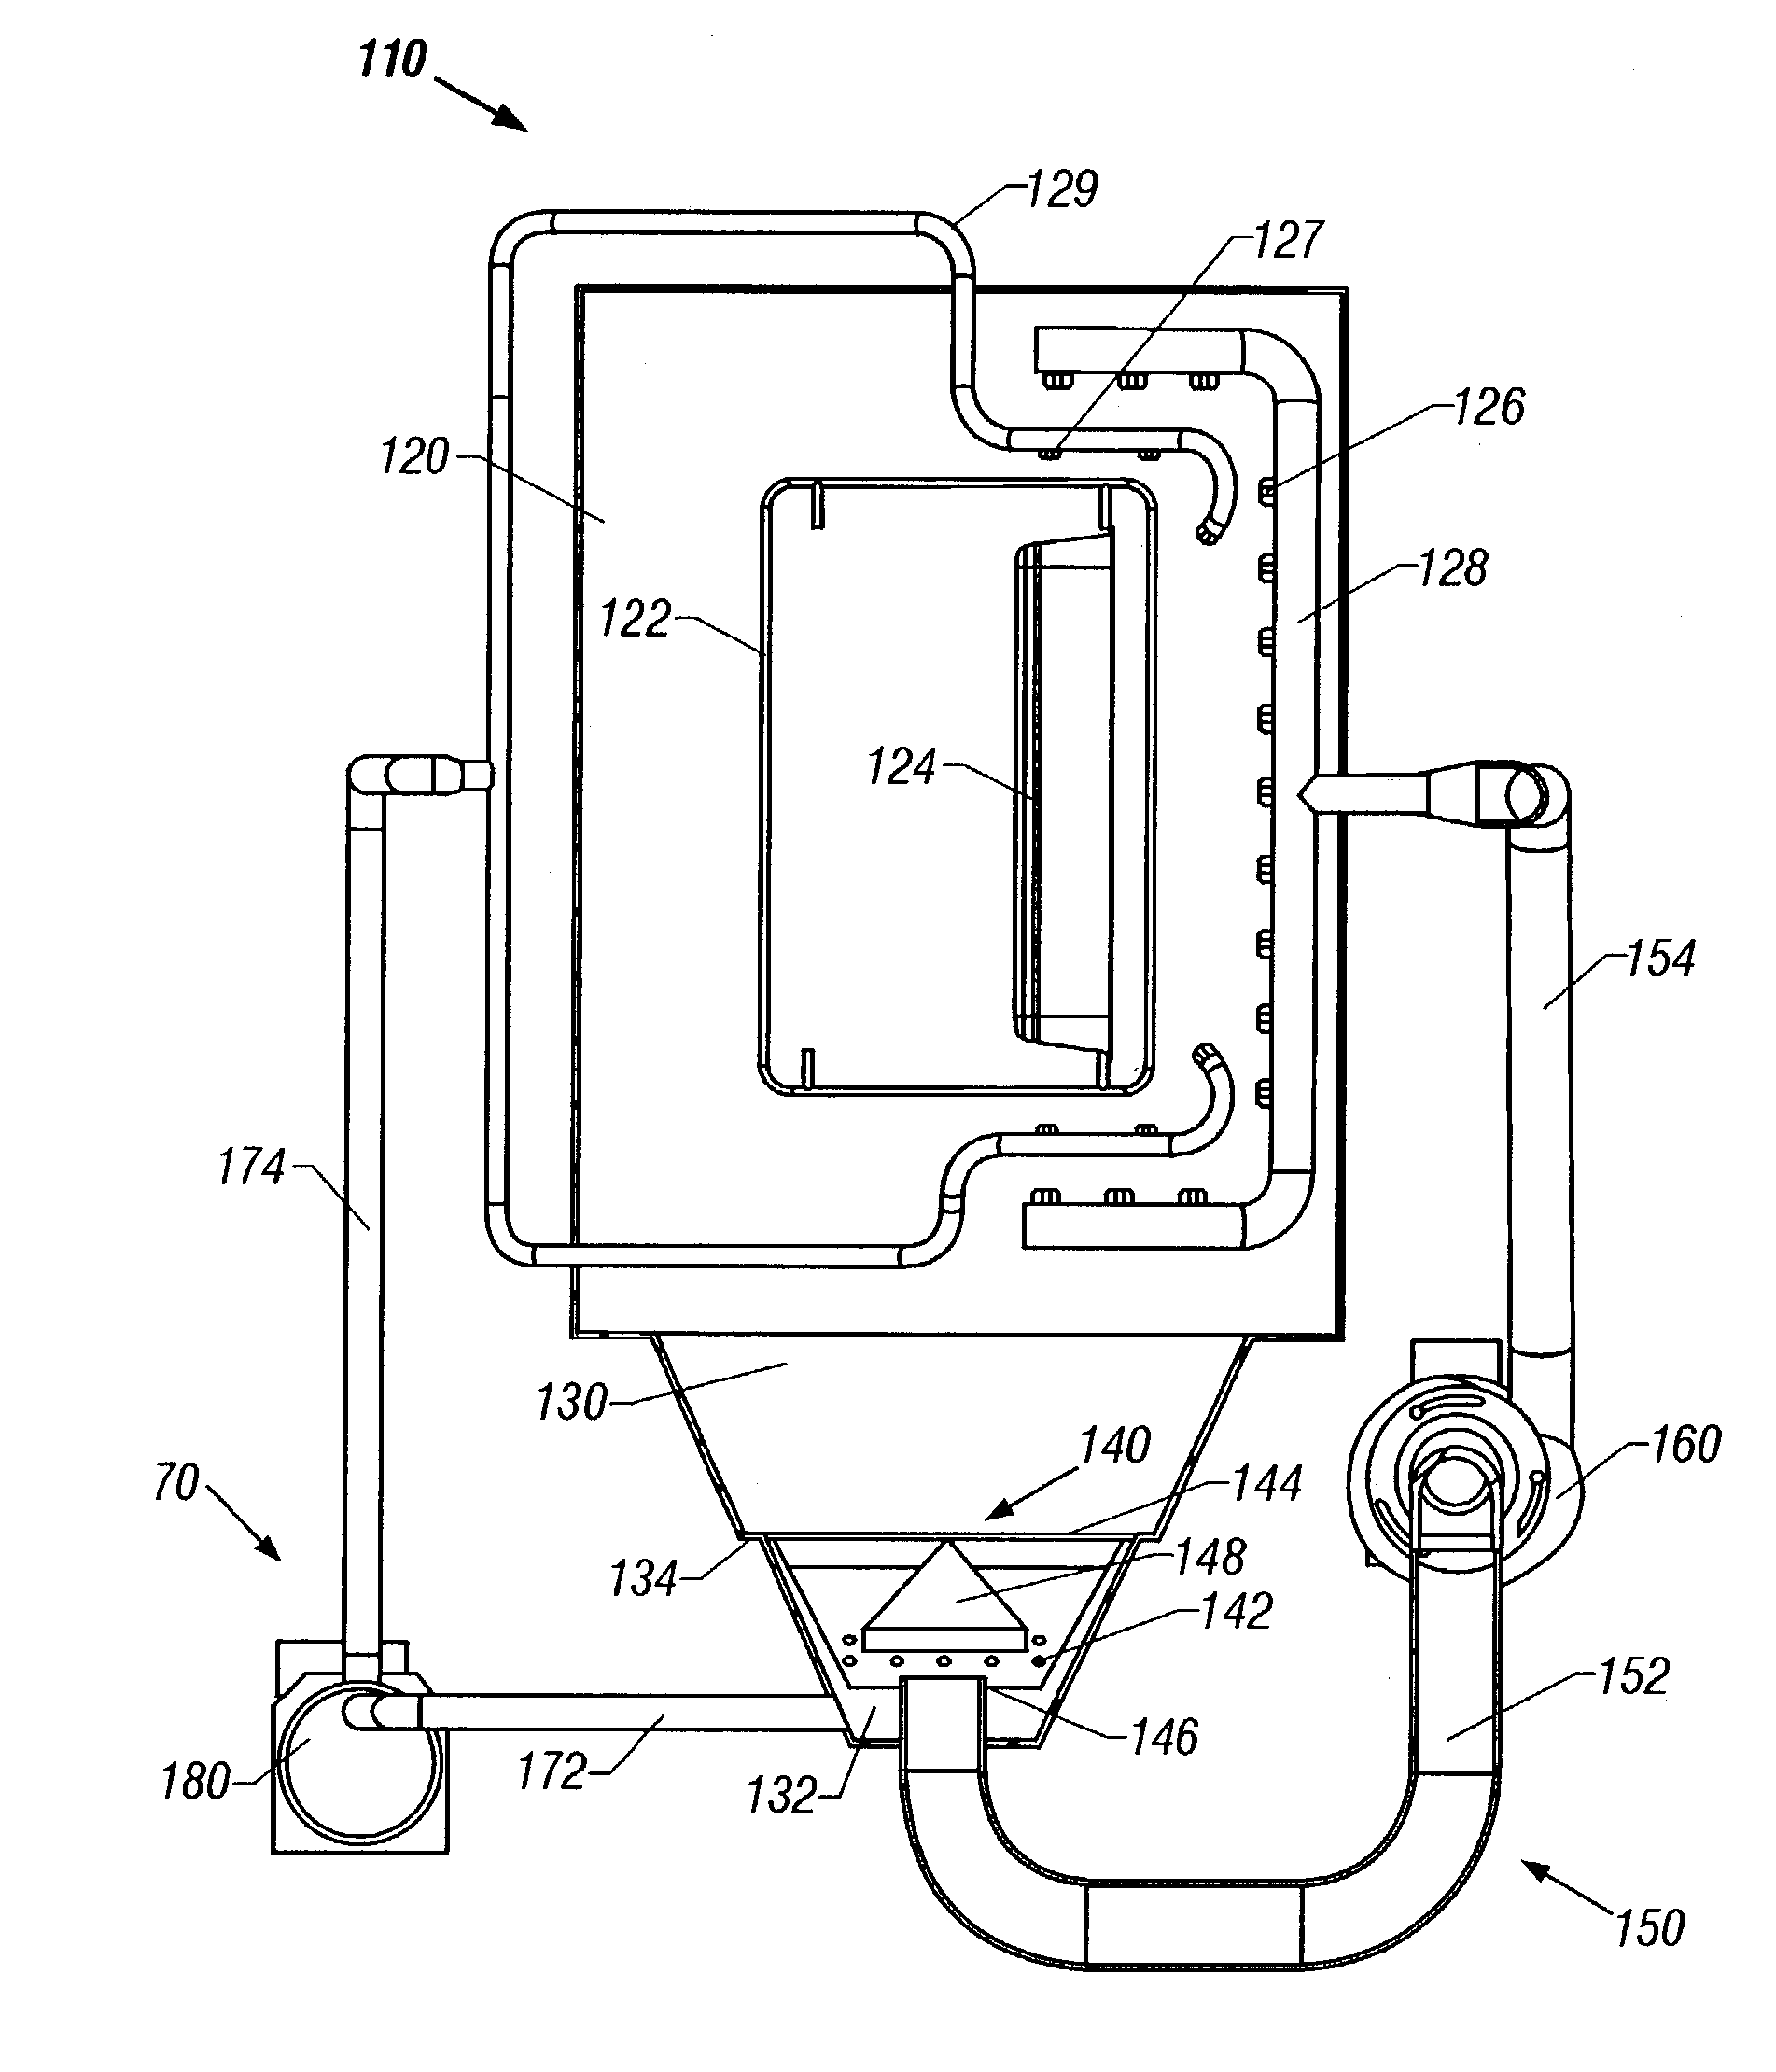 Granule dishwashing apparatus and method of use